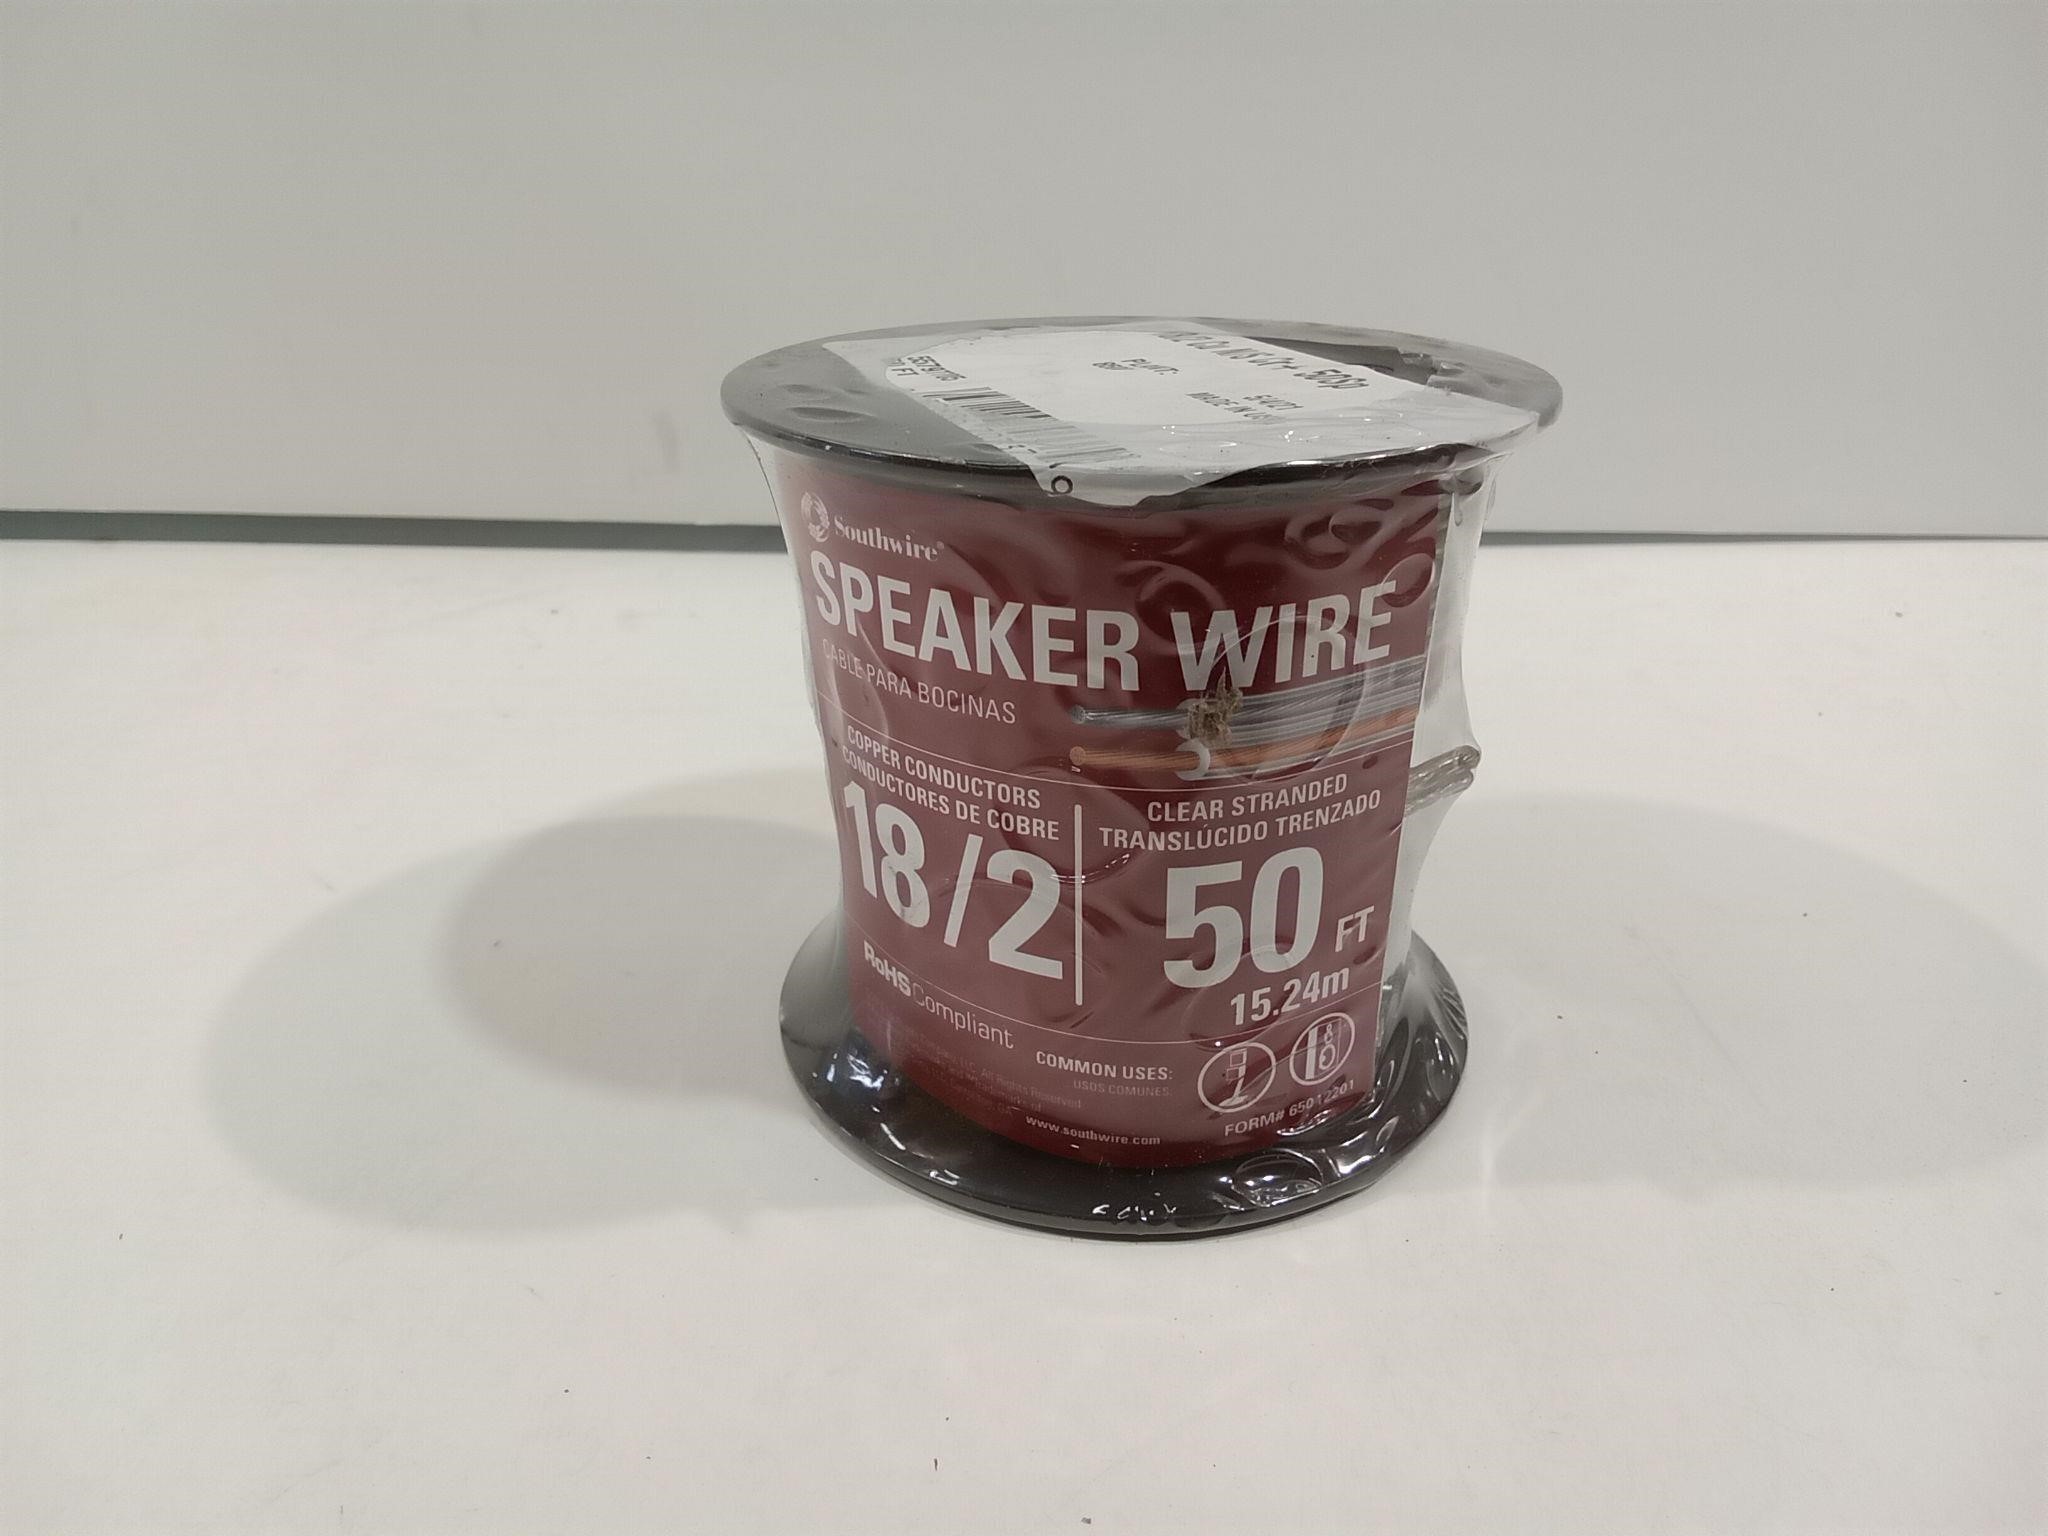 Southwire Speaker Wire 50ft Copper Conductors 18/2